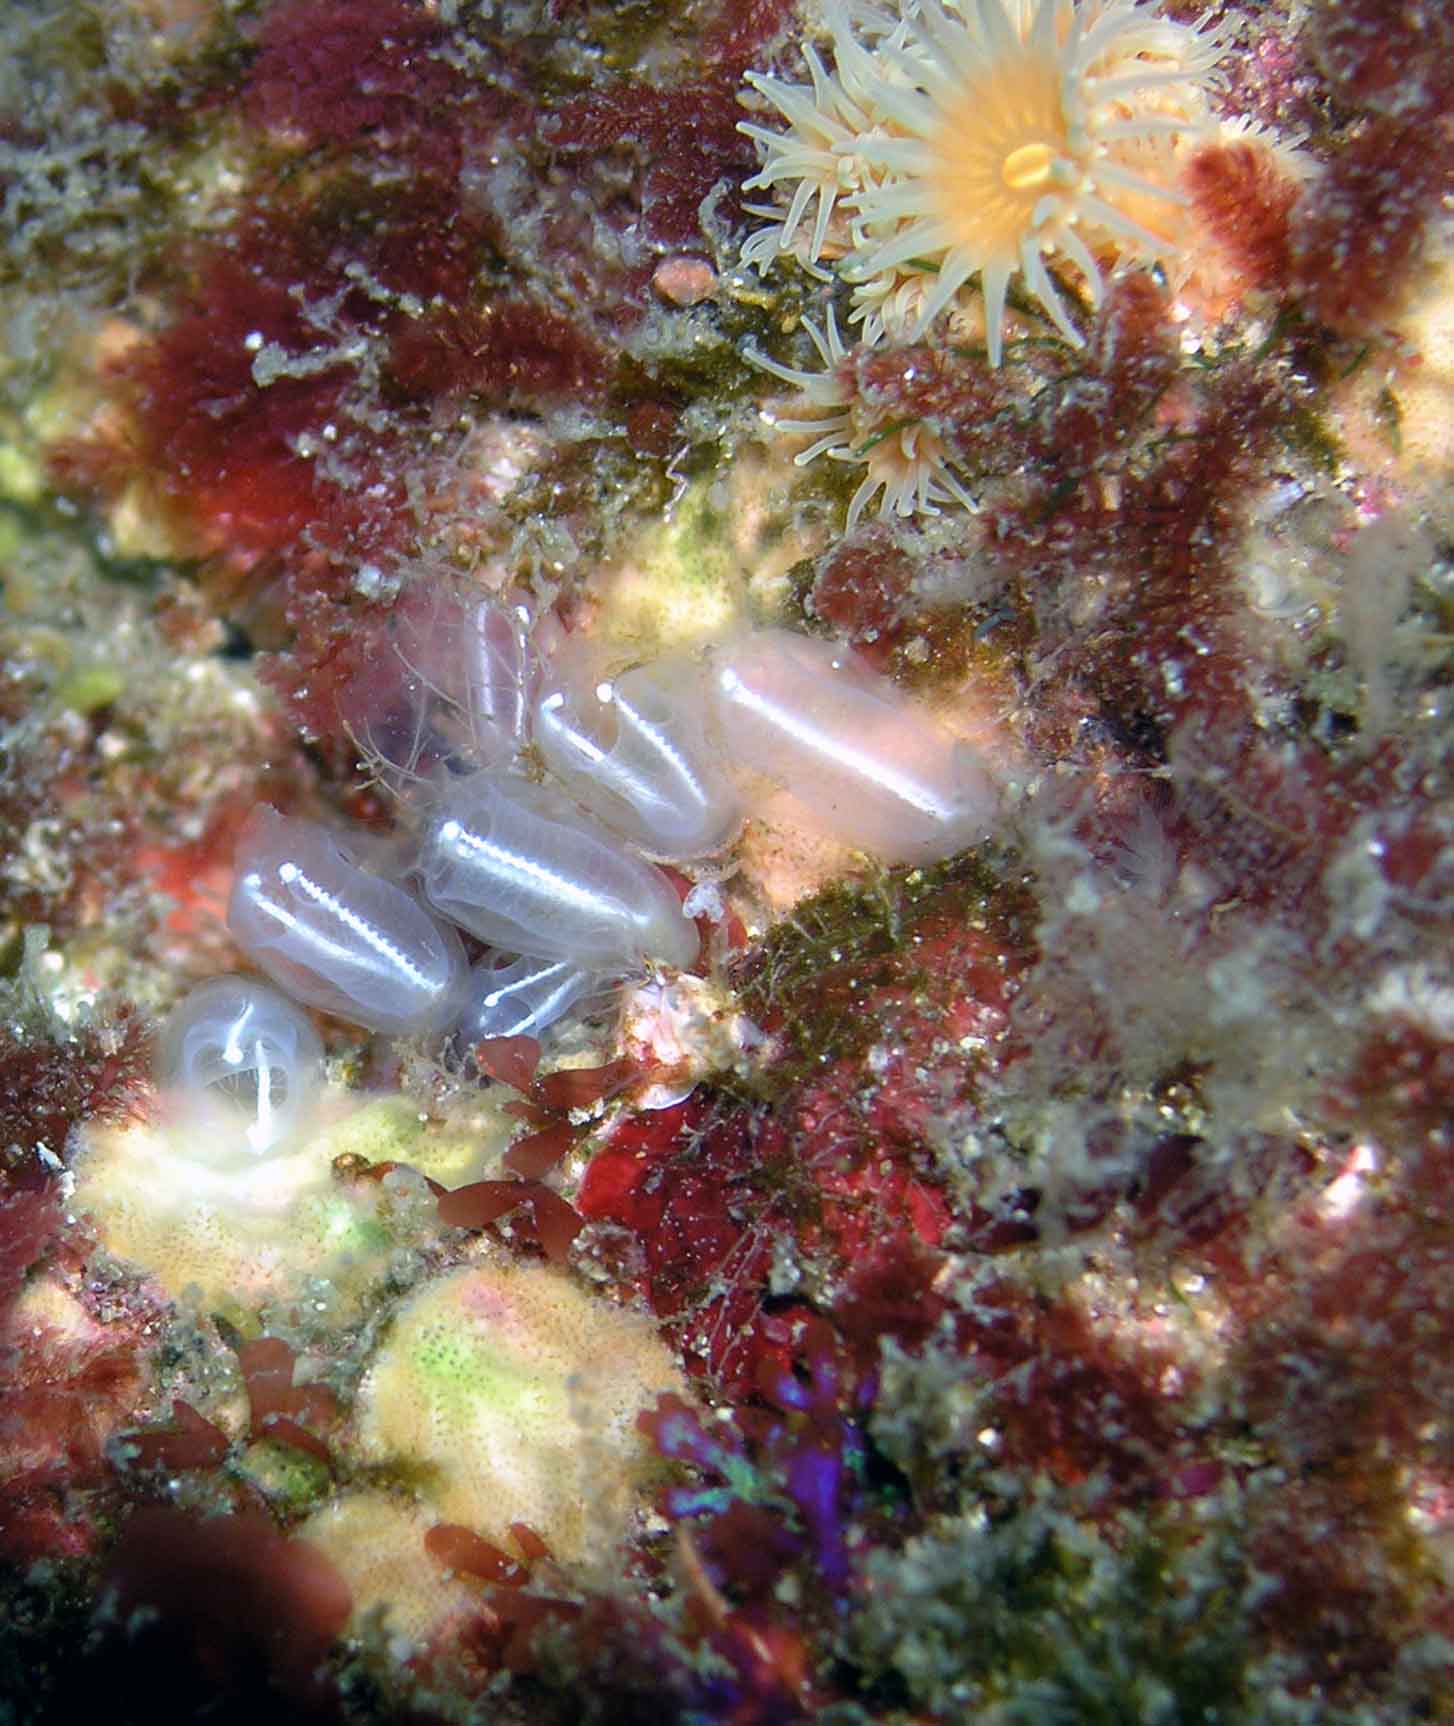 Lightbulb tunicates